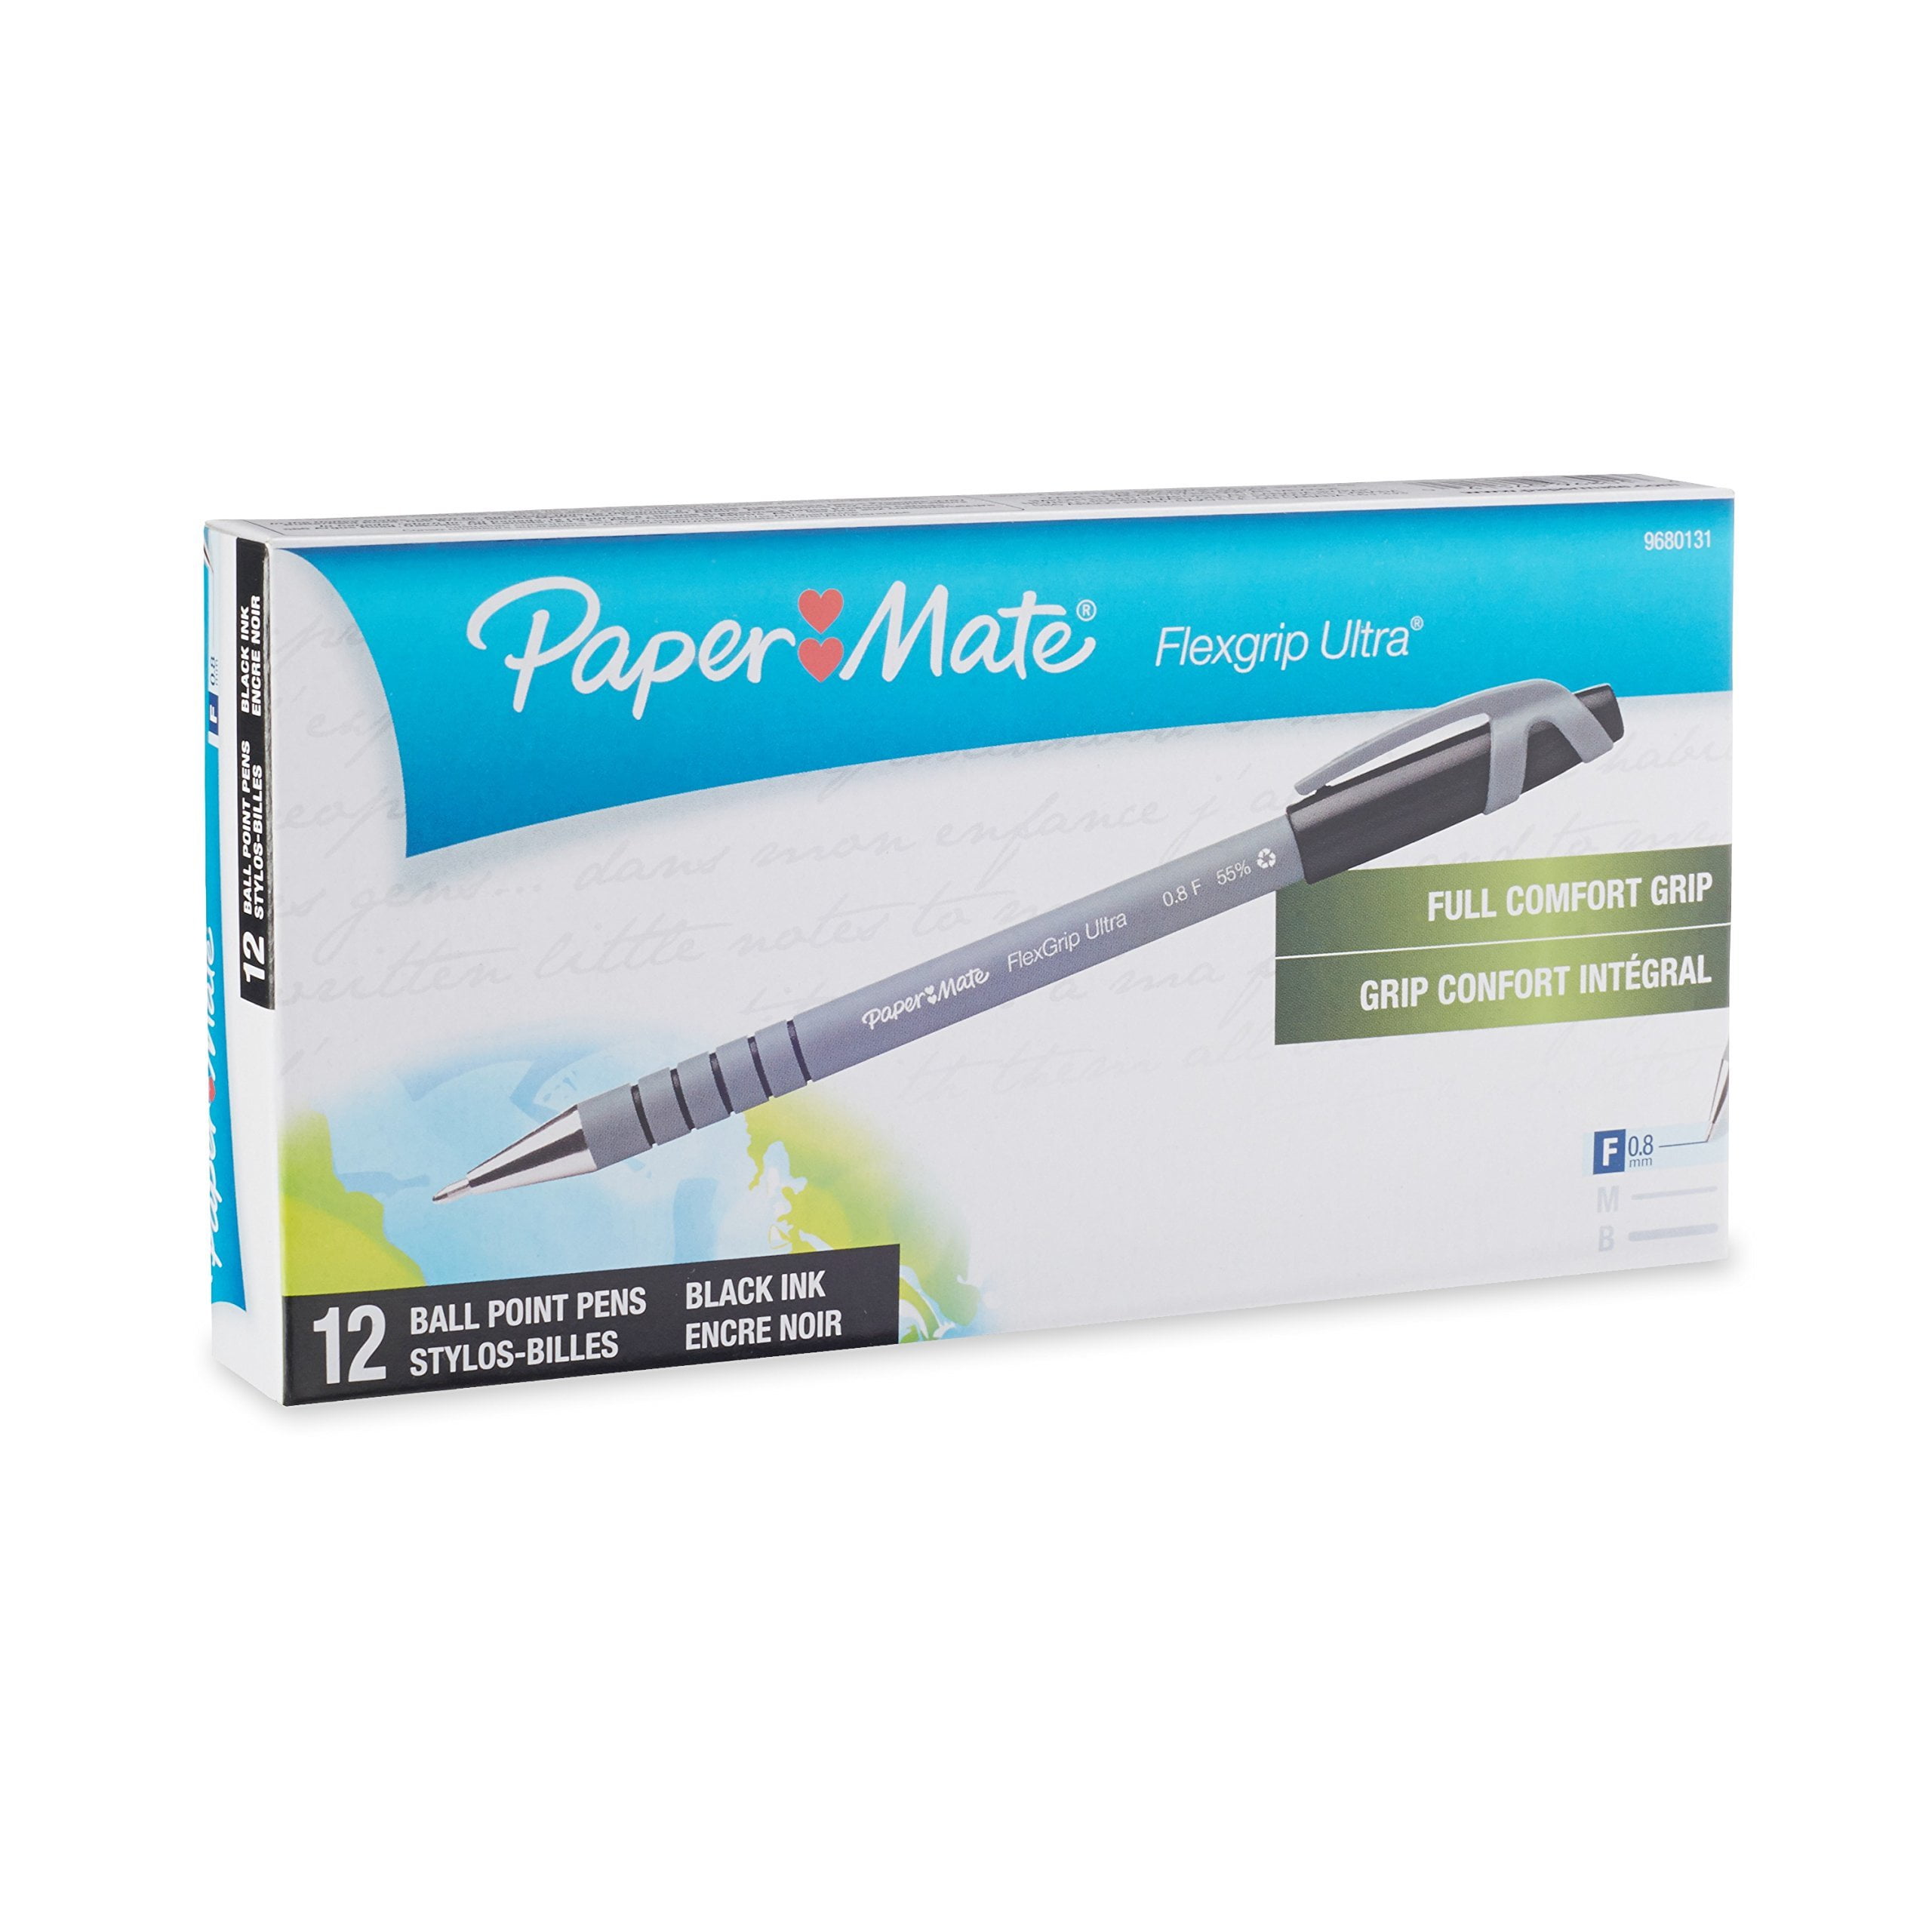 Paper Mate Flexgrip Ultra Stick Fine Point Ballpoint Pens, 12 Black Ink  Pens (9680131) 